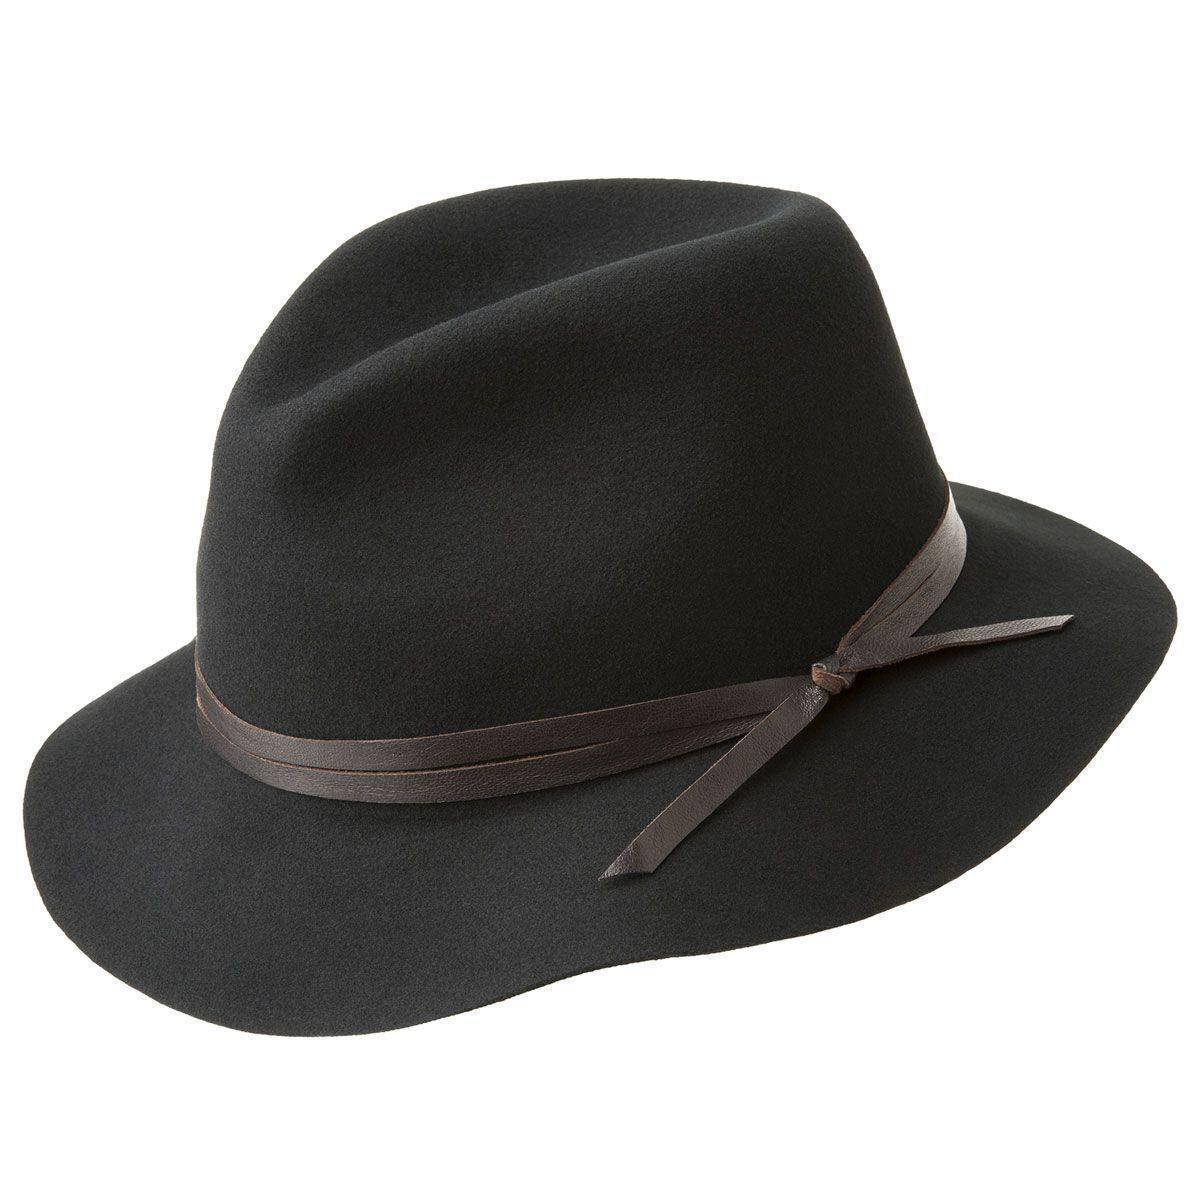 BAILEY Obie 100% Wool Felt Travel Hat Warm MADE IN USA Crushable 1371 Fedora - Black - L